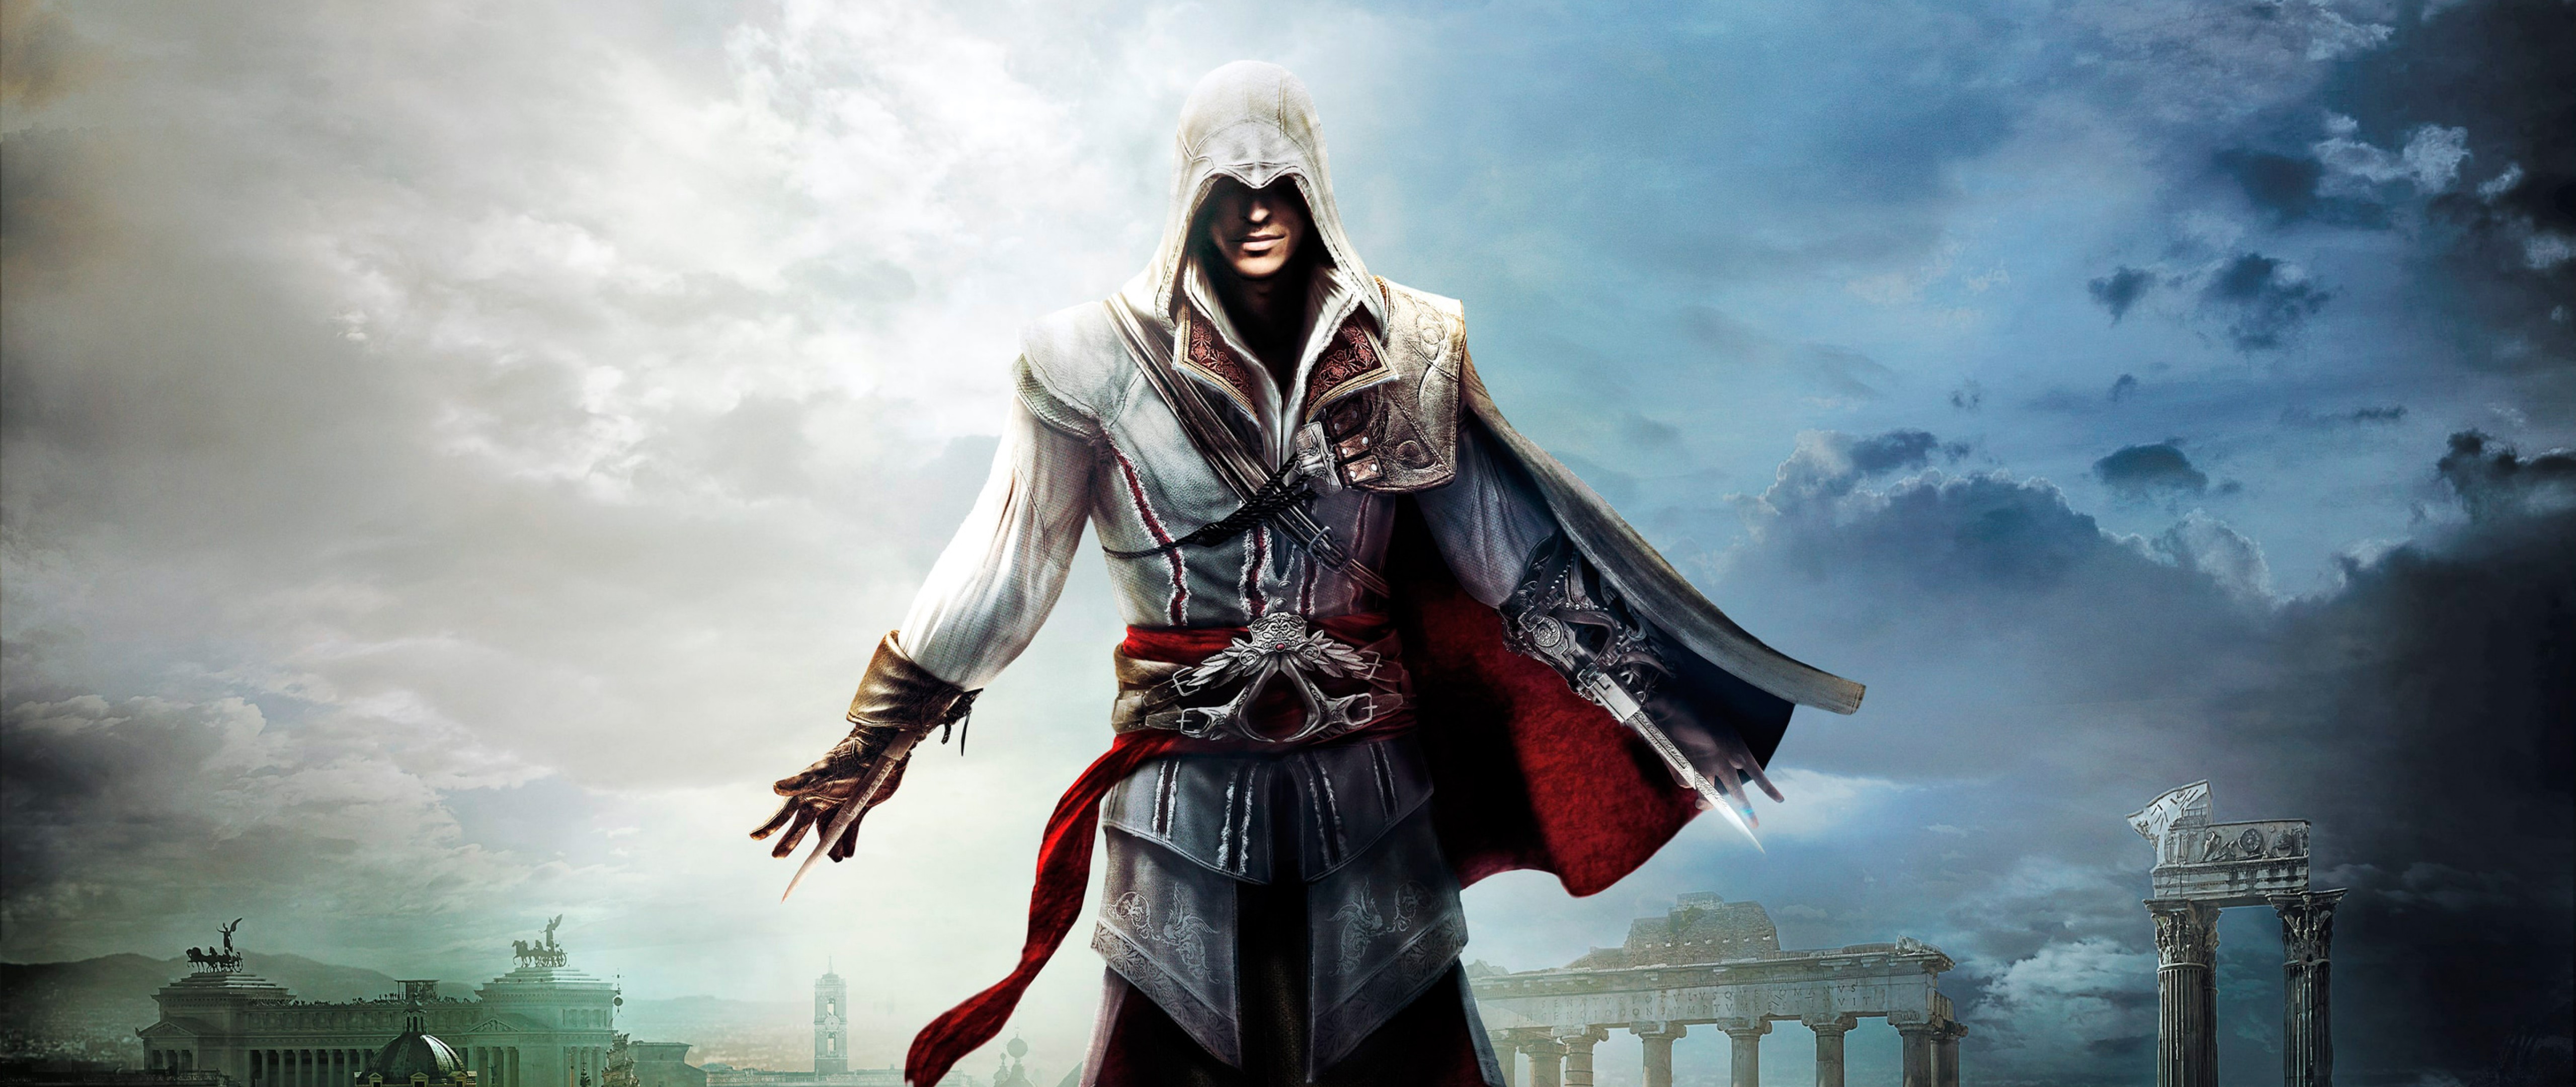 Assassin's Creed Ezio Hd Wallpaper for Desktop and Mobiles 4K Ultra HD ...